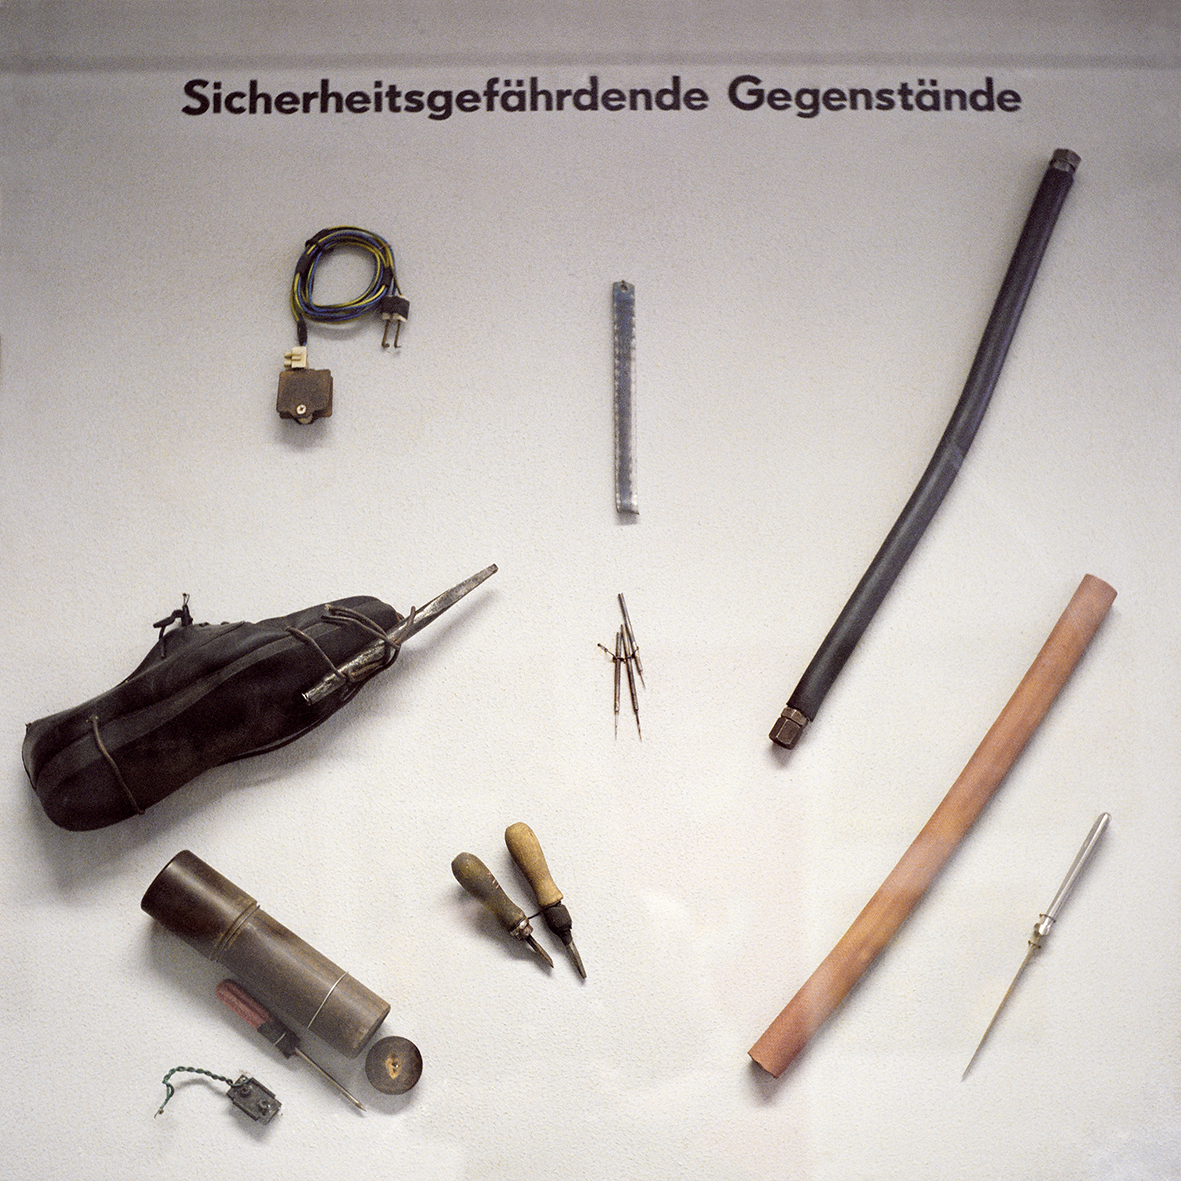 Things and words- Stasimuseum Berlin